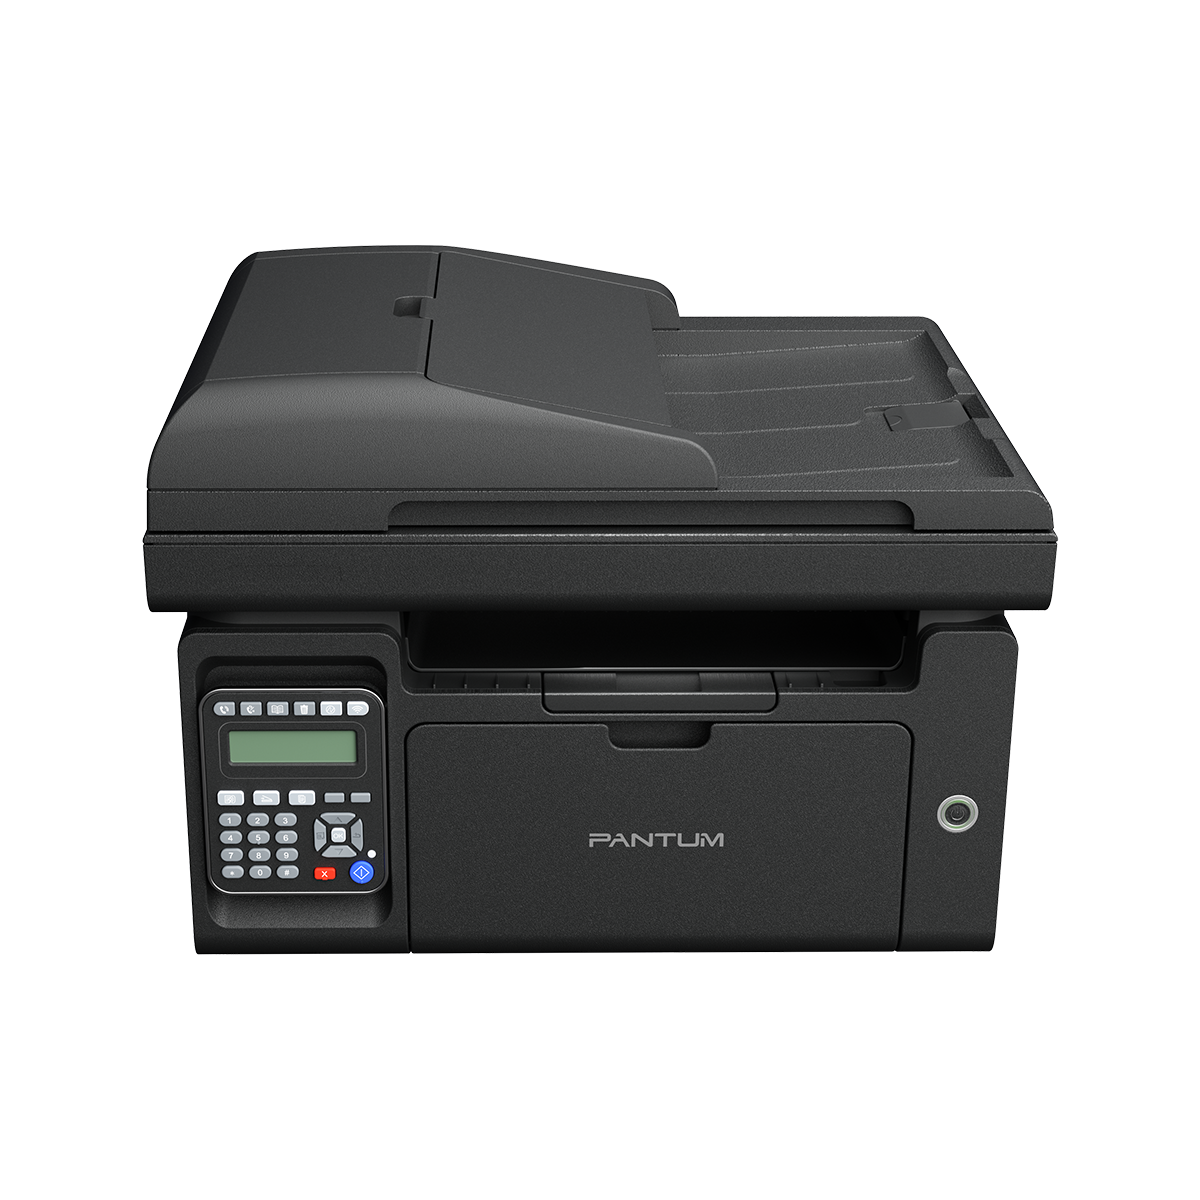 Pantum M6802FDW impresora láser monocromática inalámbrica Fax copiadora todo en uno red inalámbrica e impresión dúplex para uso doméstico y oficina V1X47B 